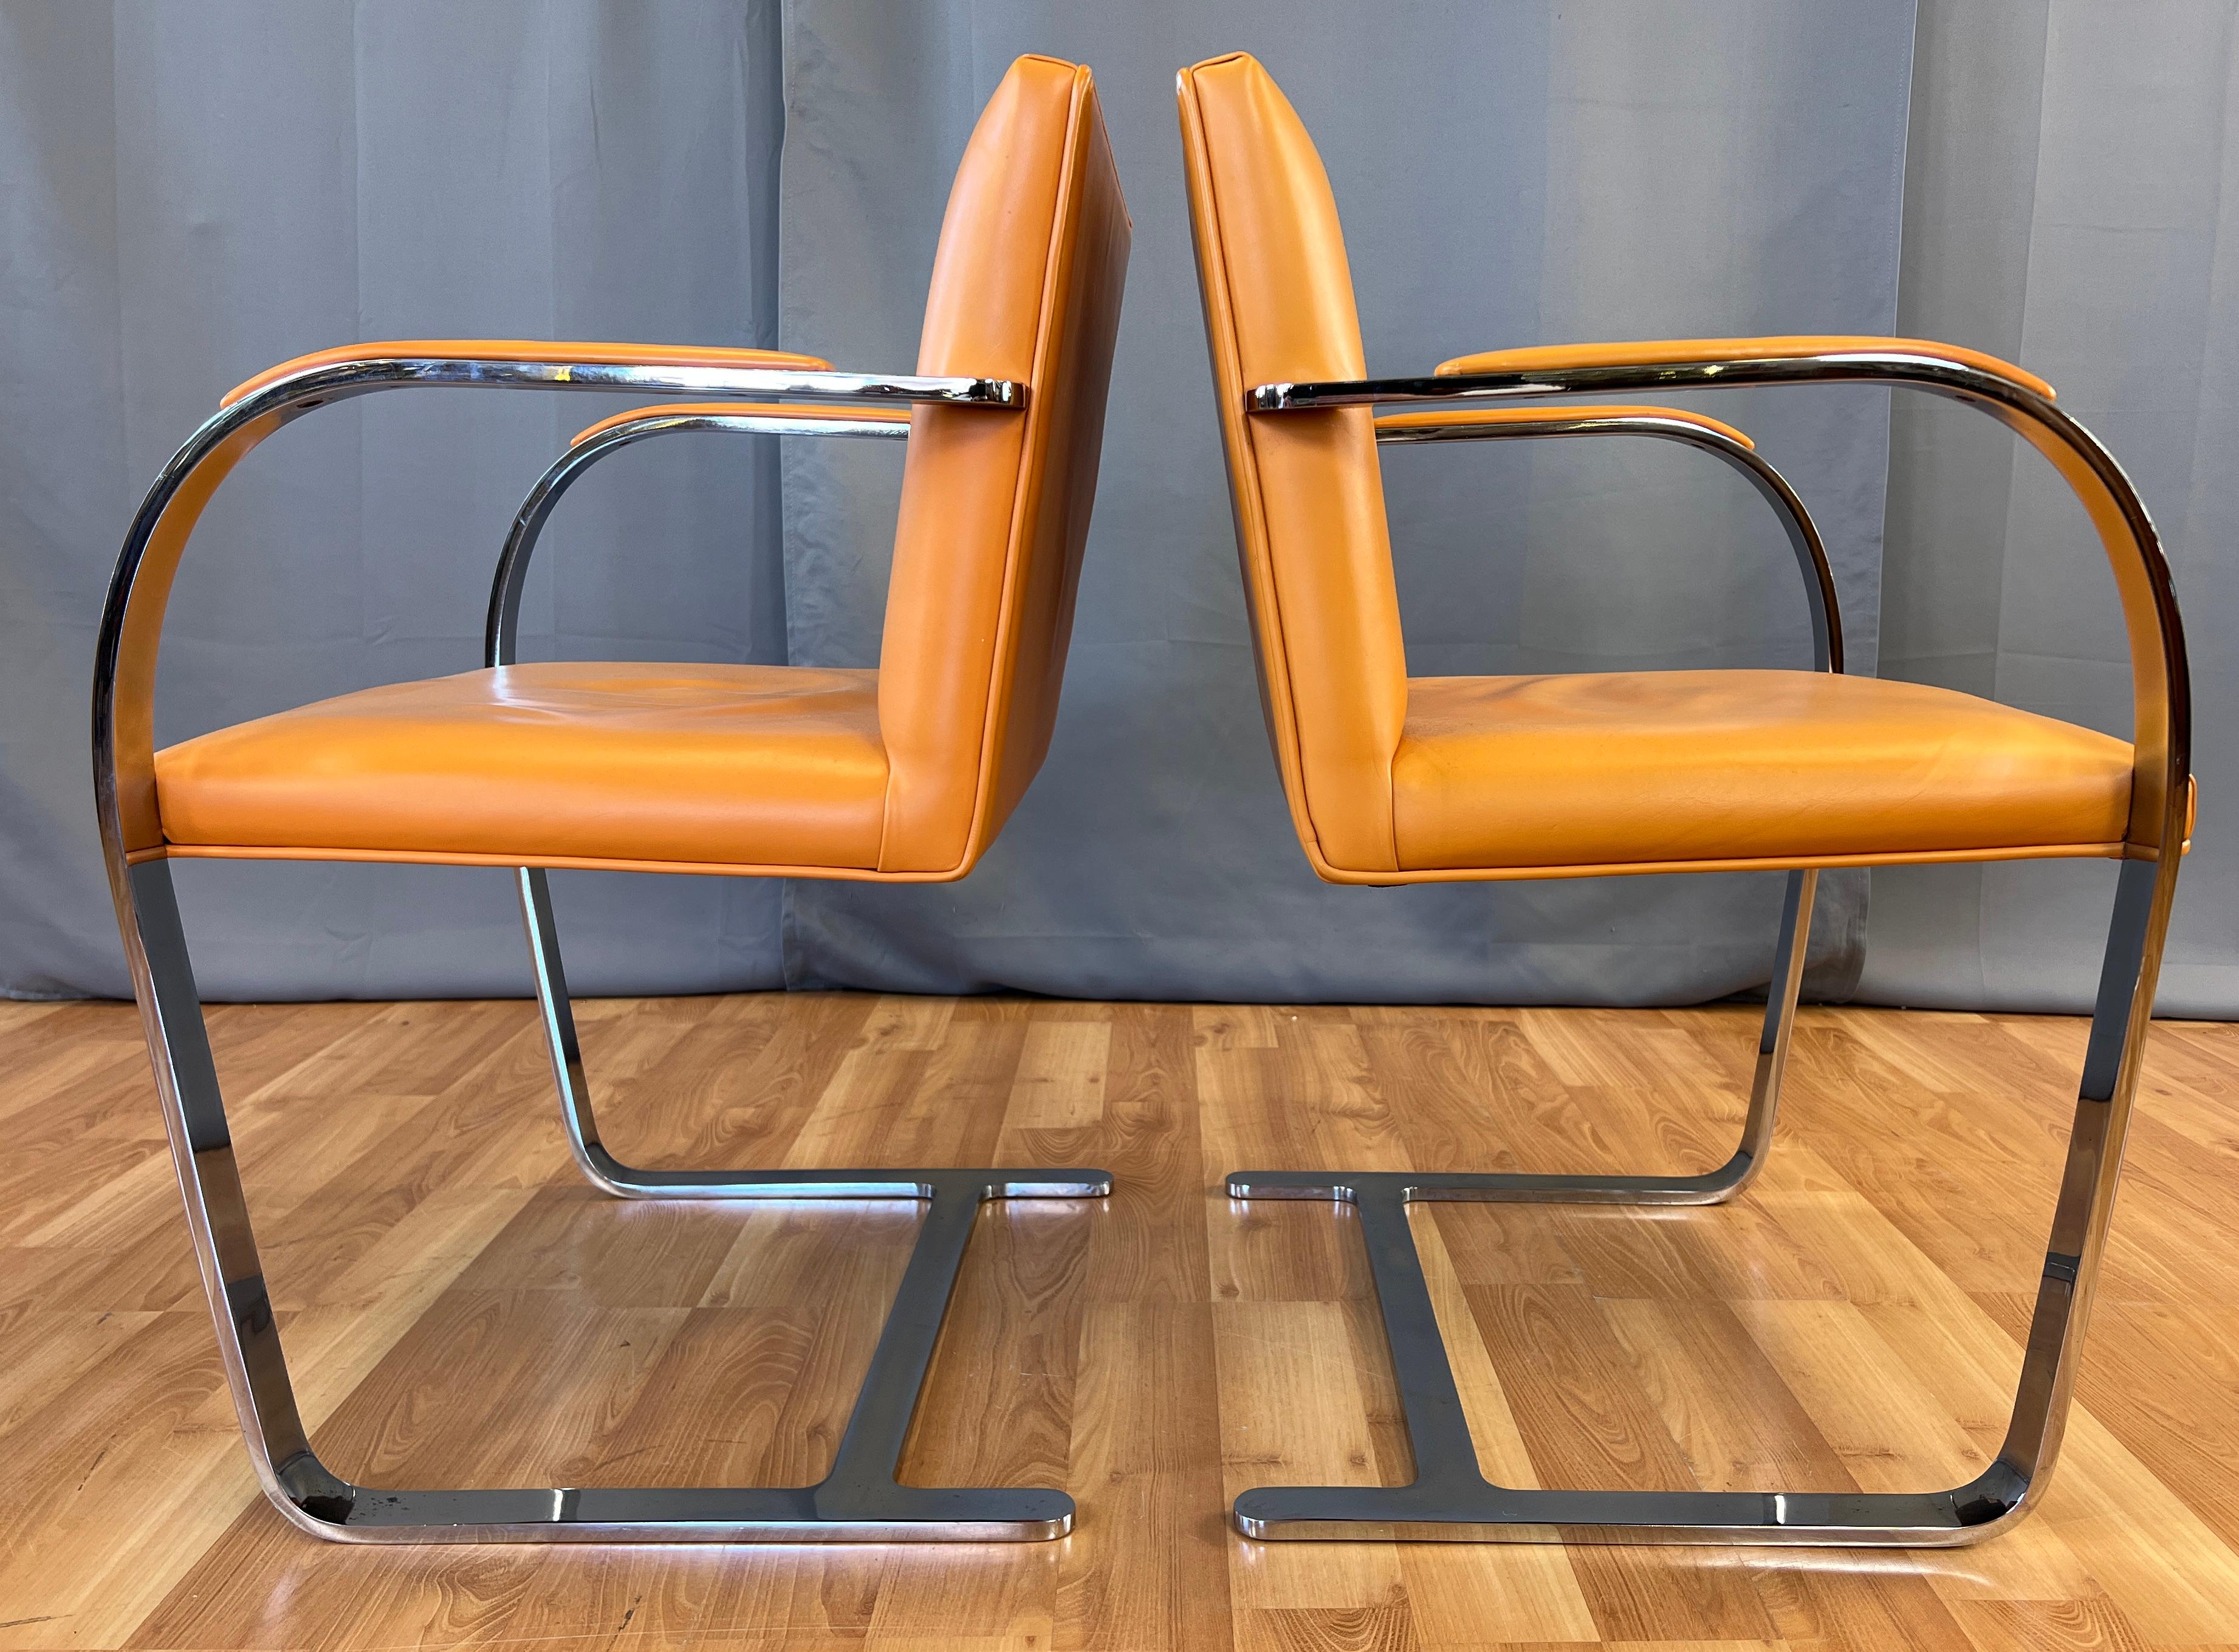 Late 20th Century Two Gordon International Flat Bar Brno Armchairs in Orange Leather, circa 1970s For Sale